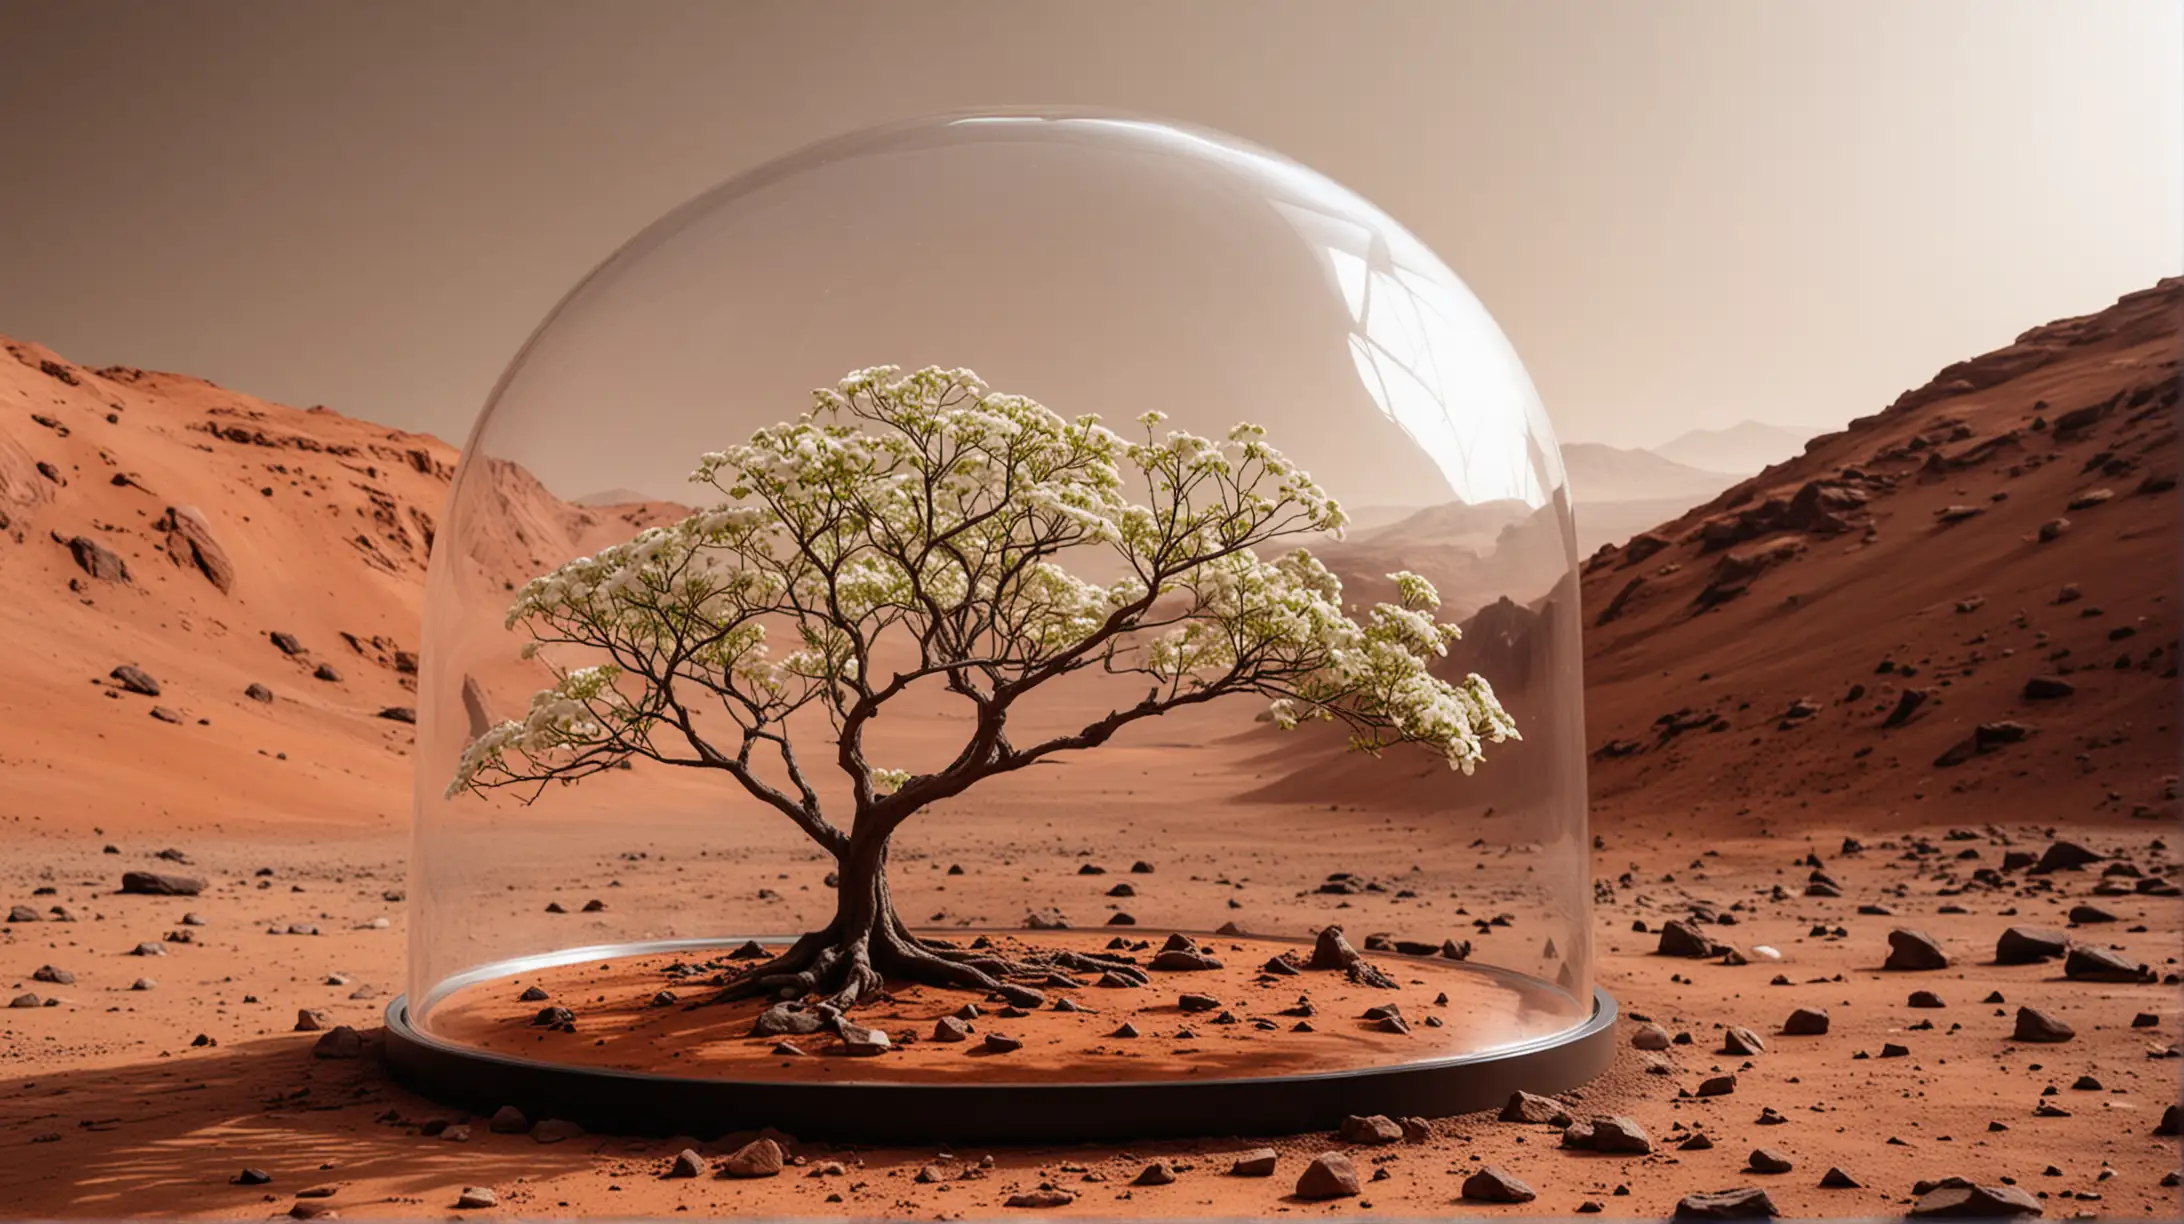 Japanese dogwood tree on Mars surface under glass dome